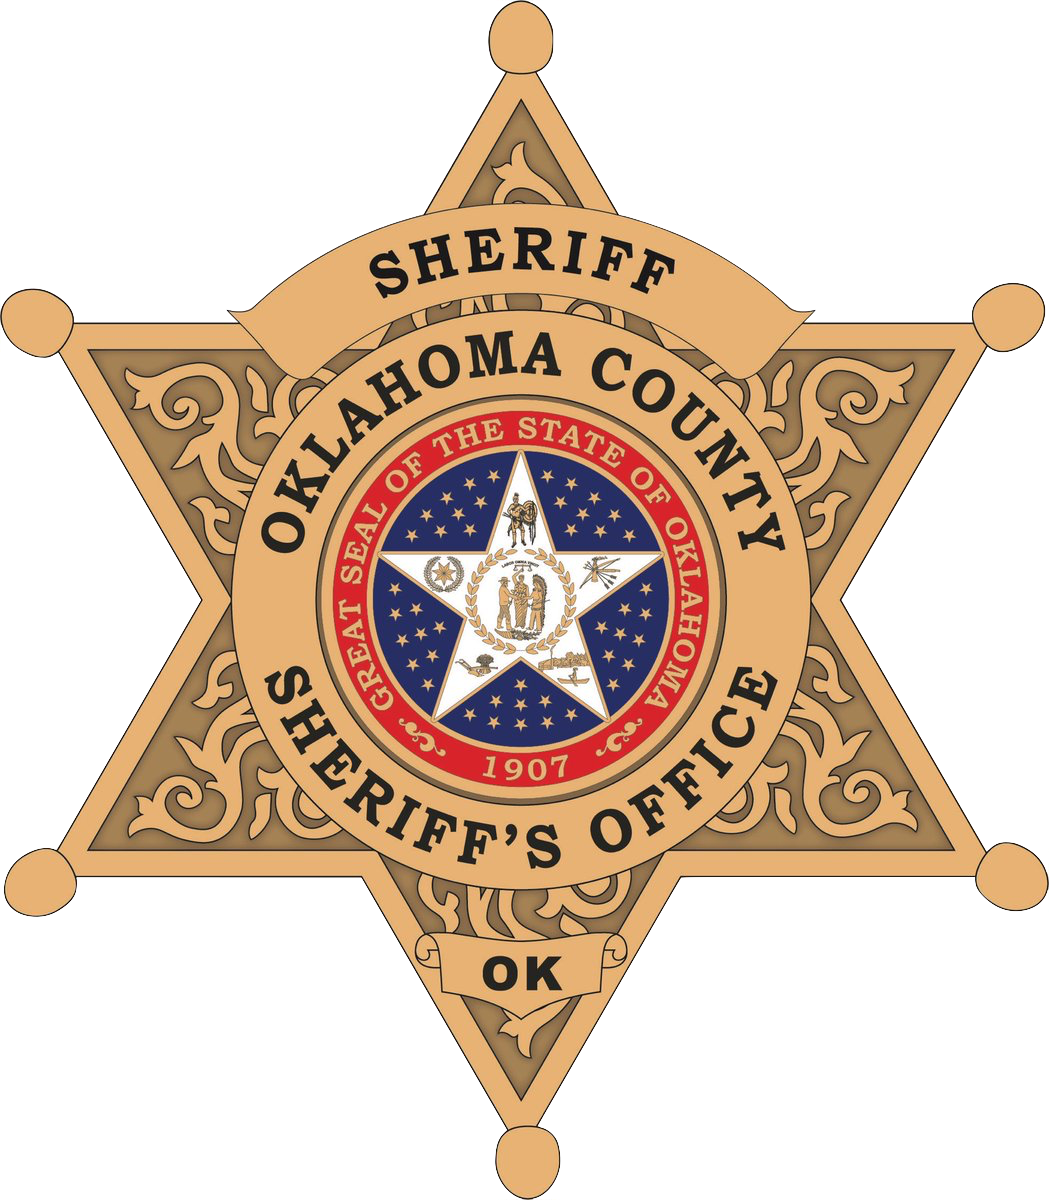 Oklahoma County sheriff department badge